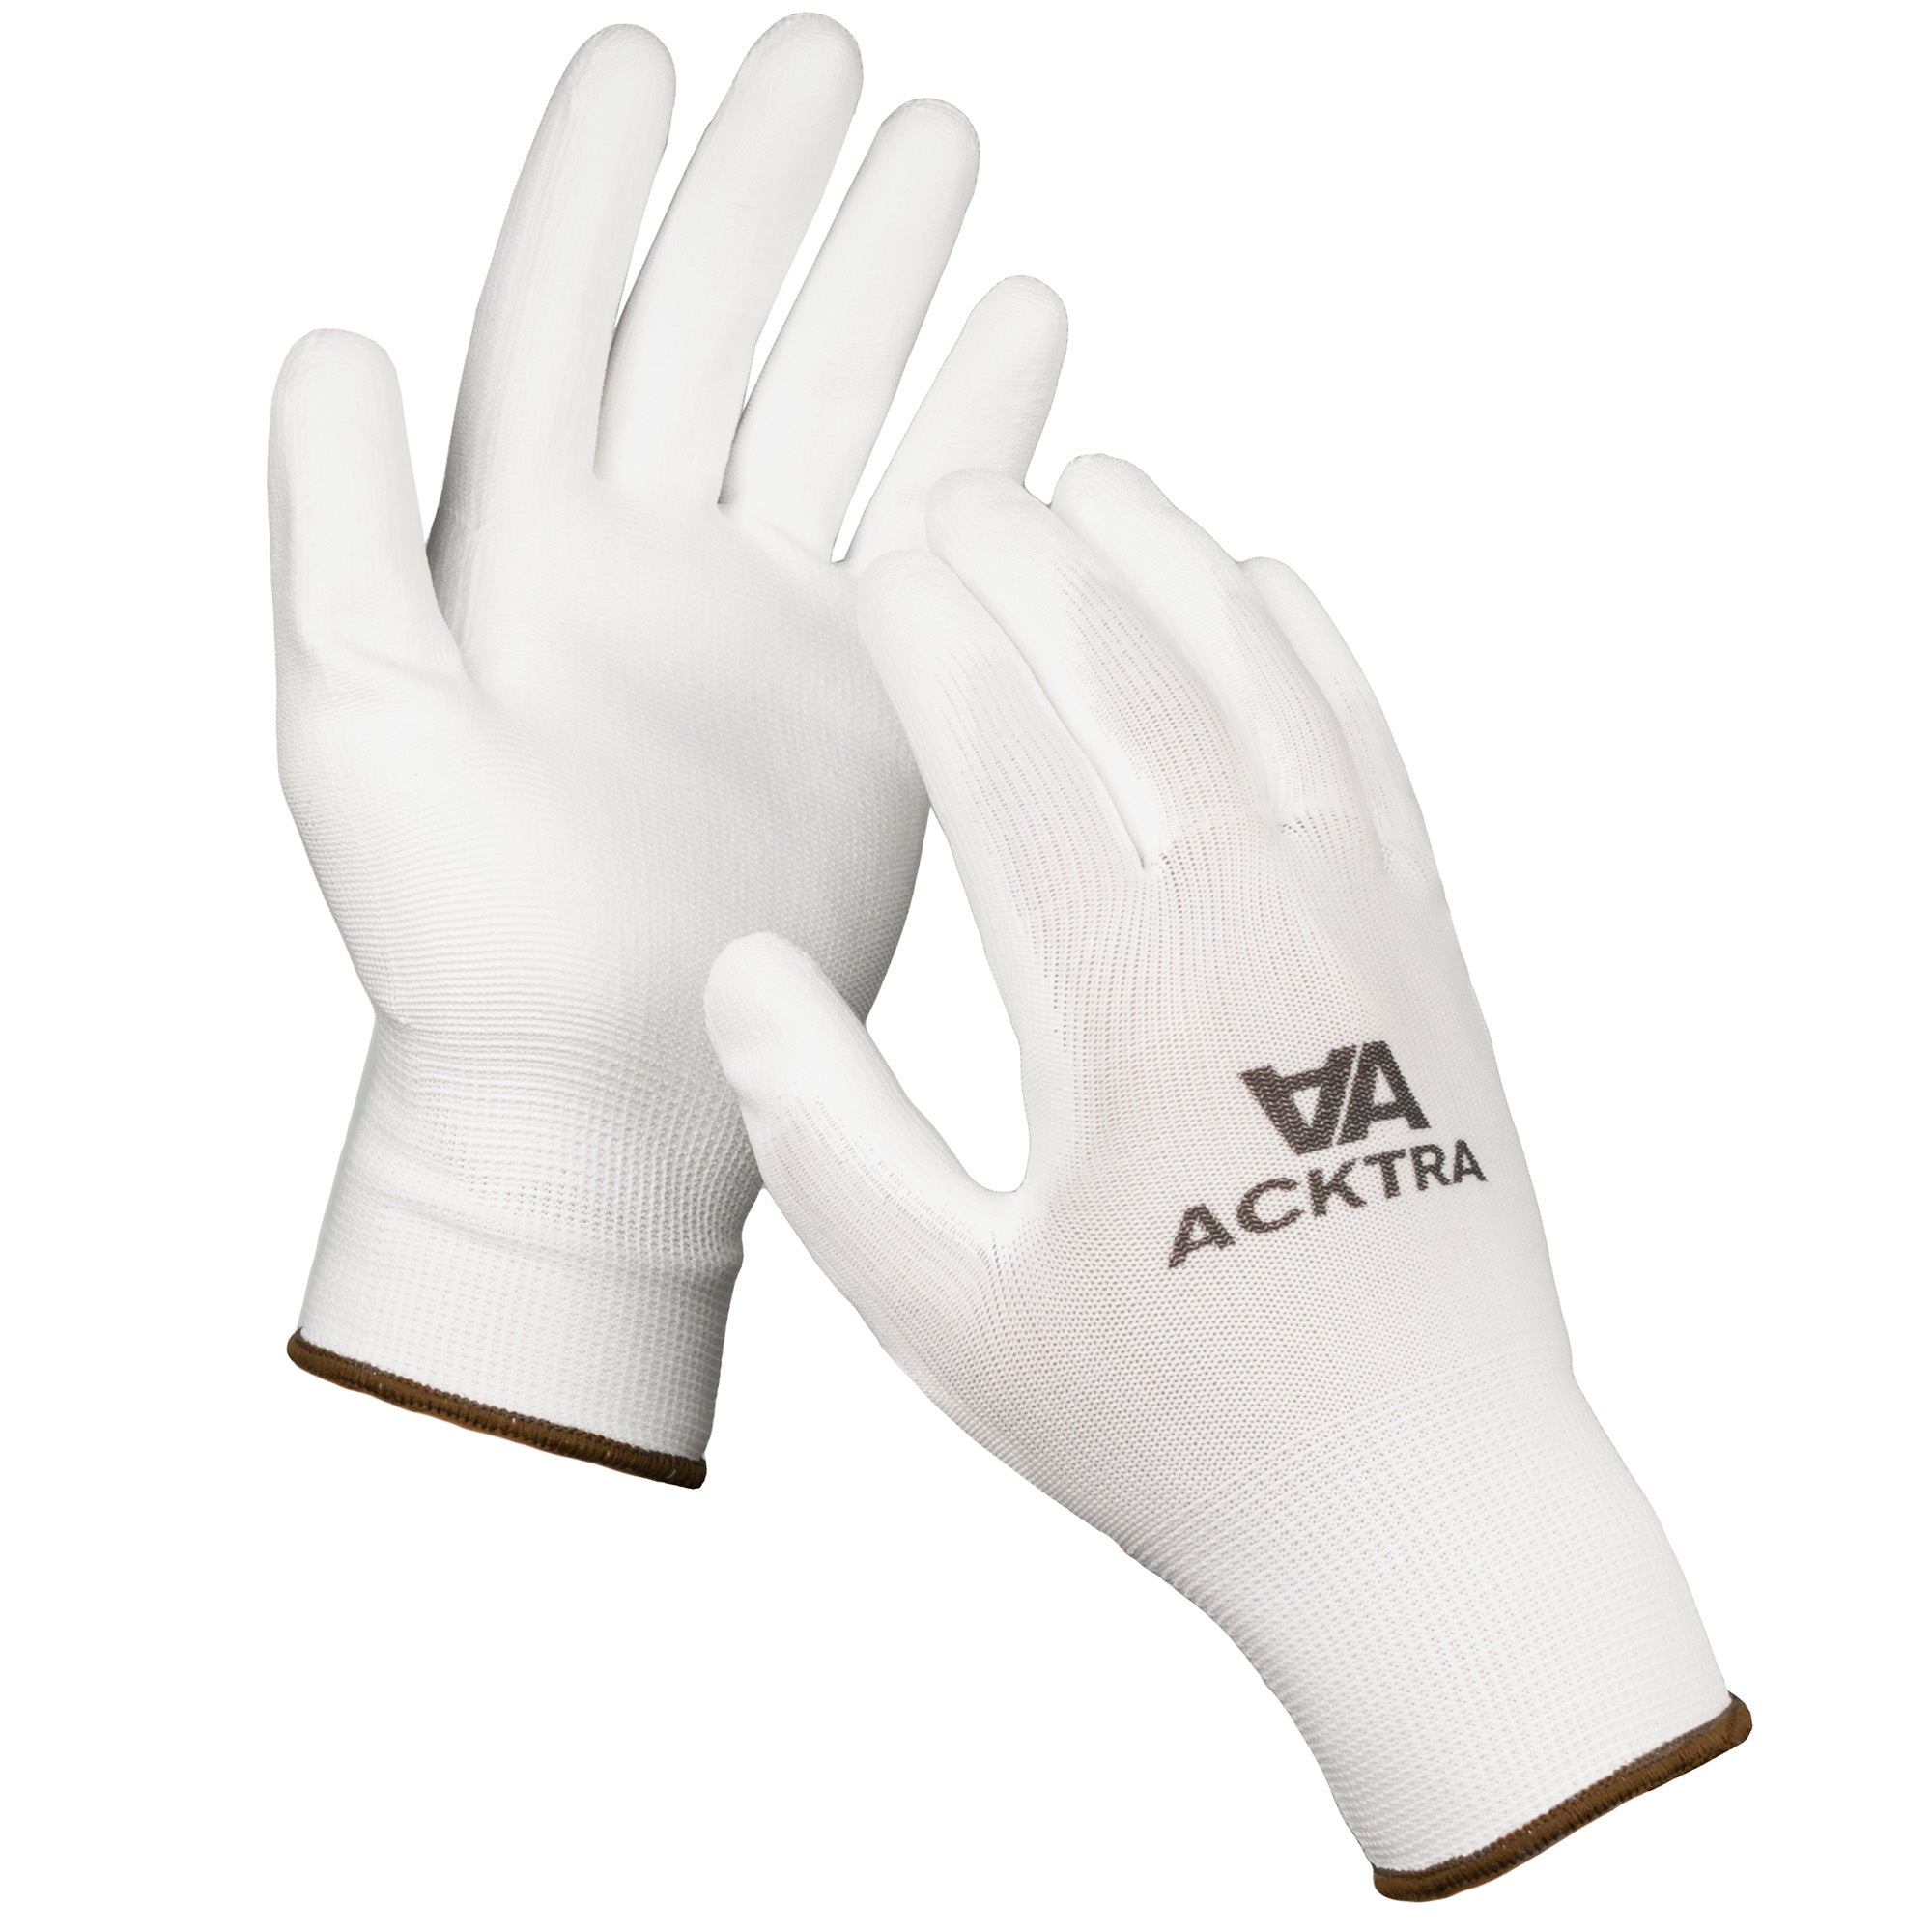 ACKTRA Safety WORK GLOVES, 15G Seamless Grey Nylon Spandex Shell